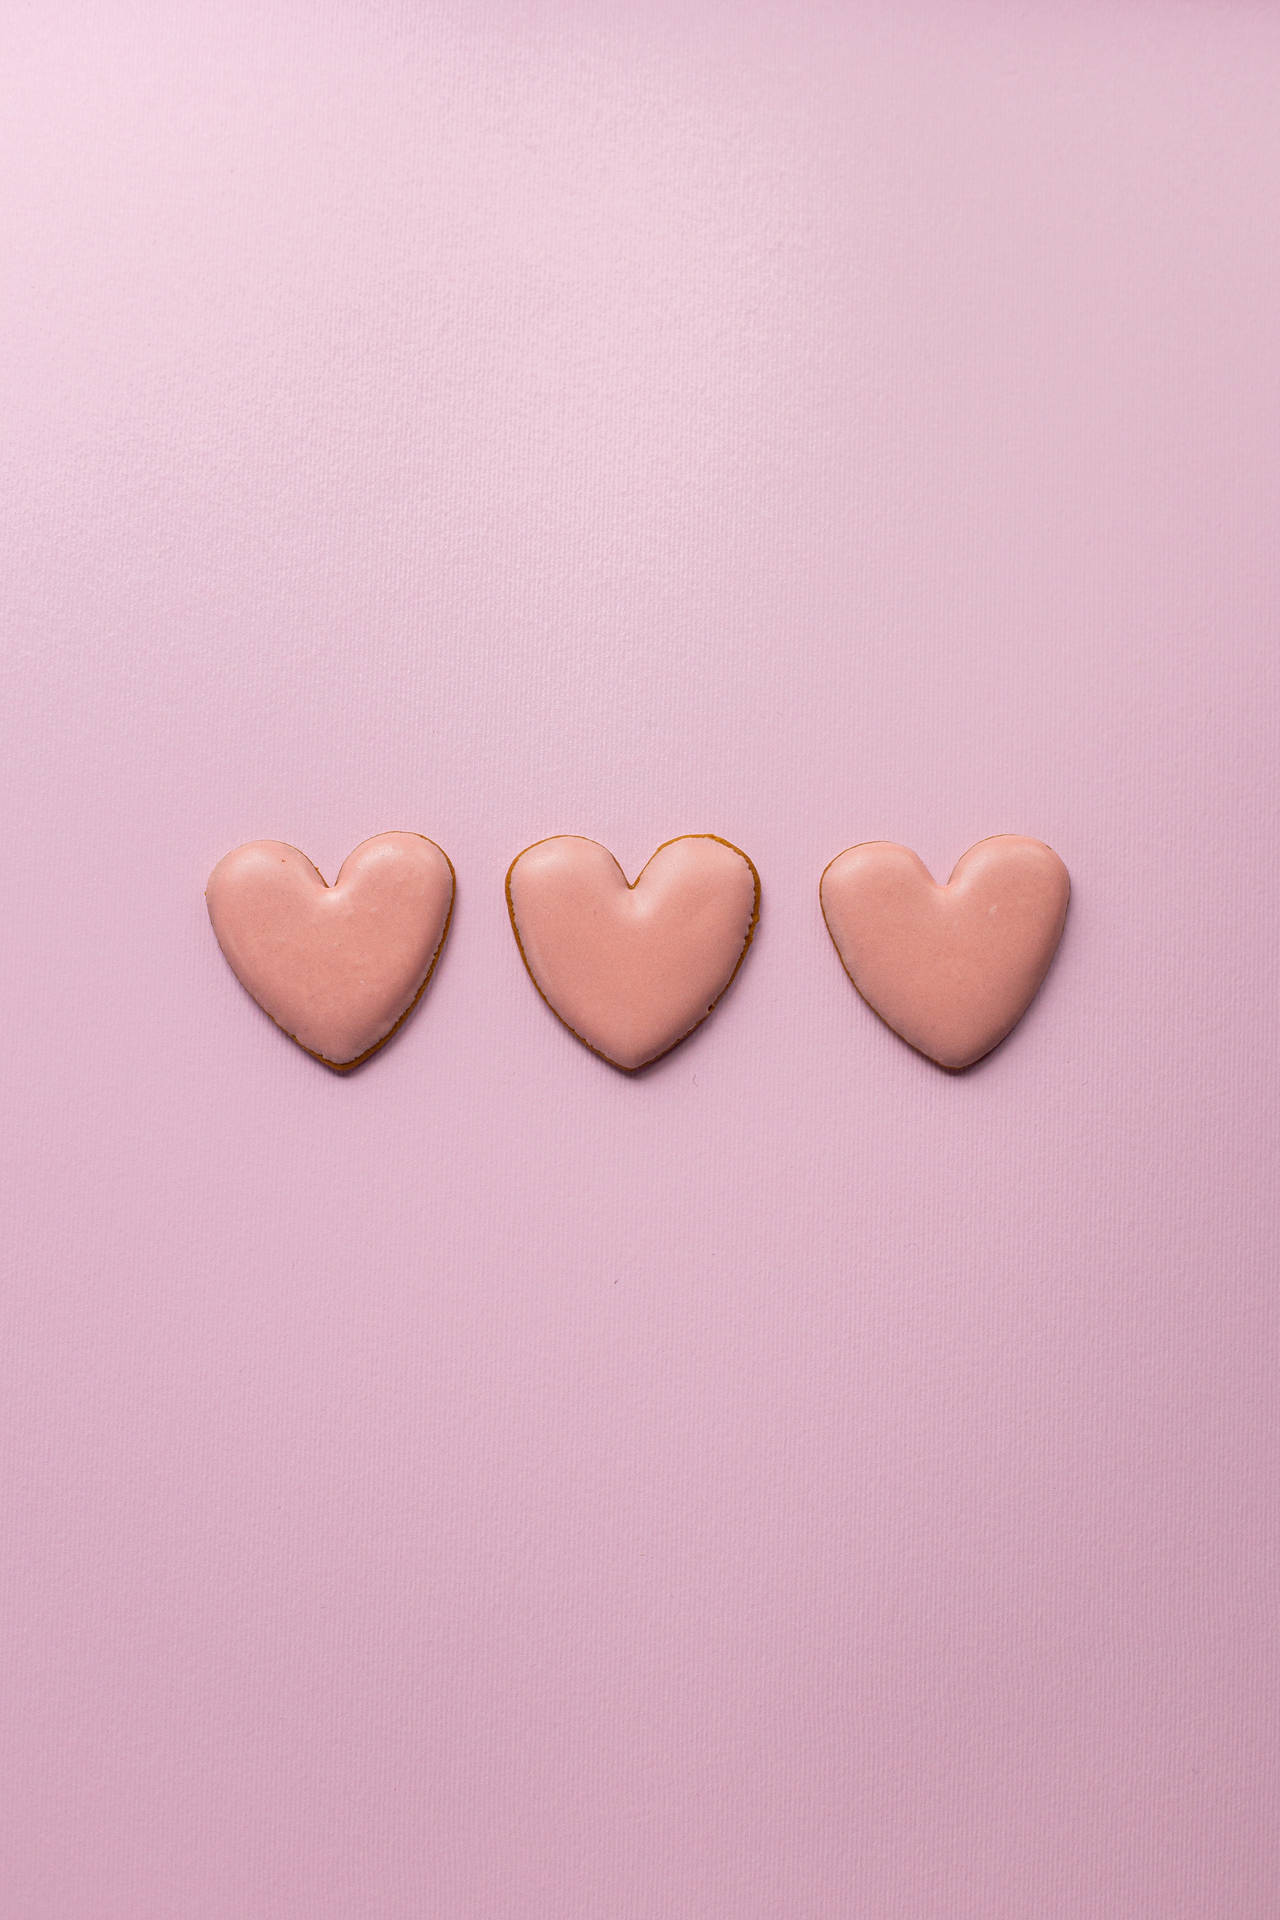 Three Pastel Pink Heart Sugar Cookies Background